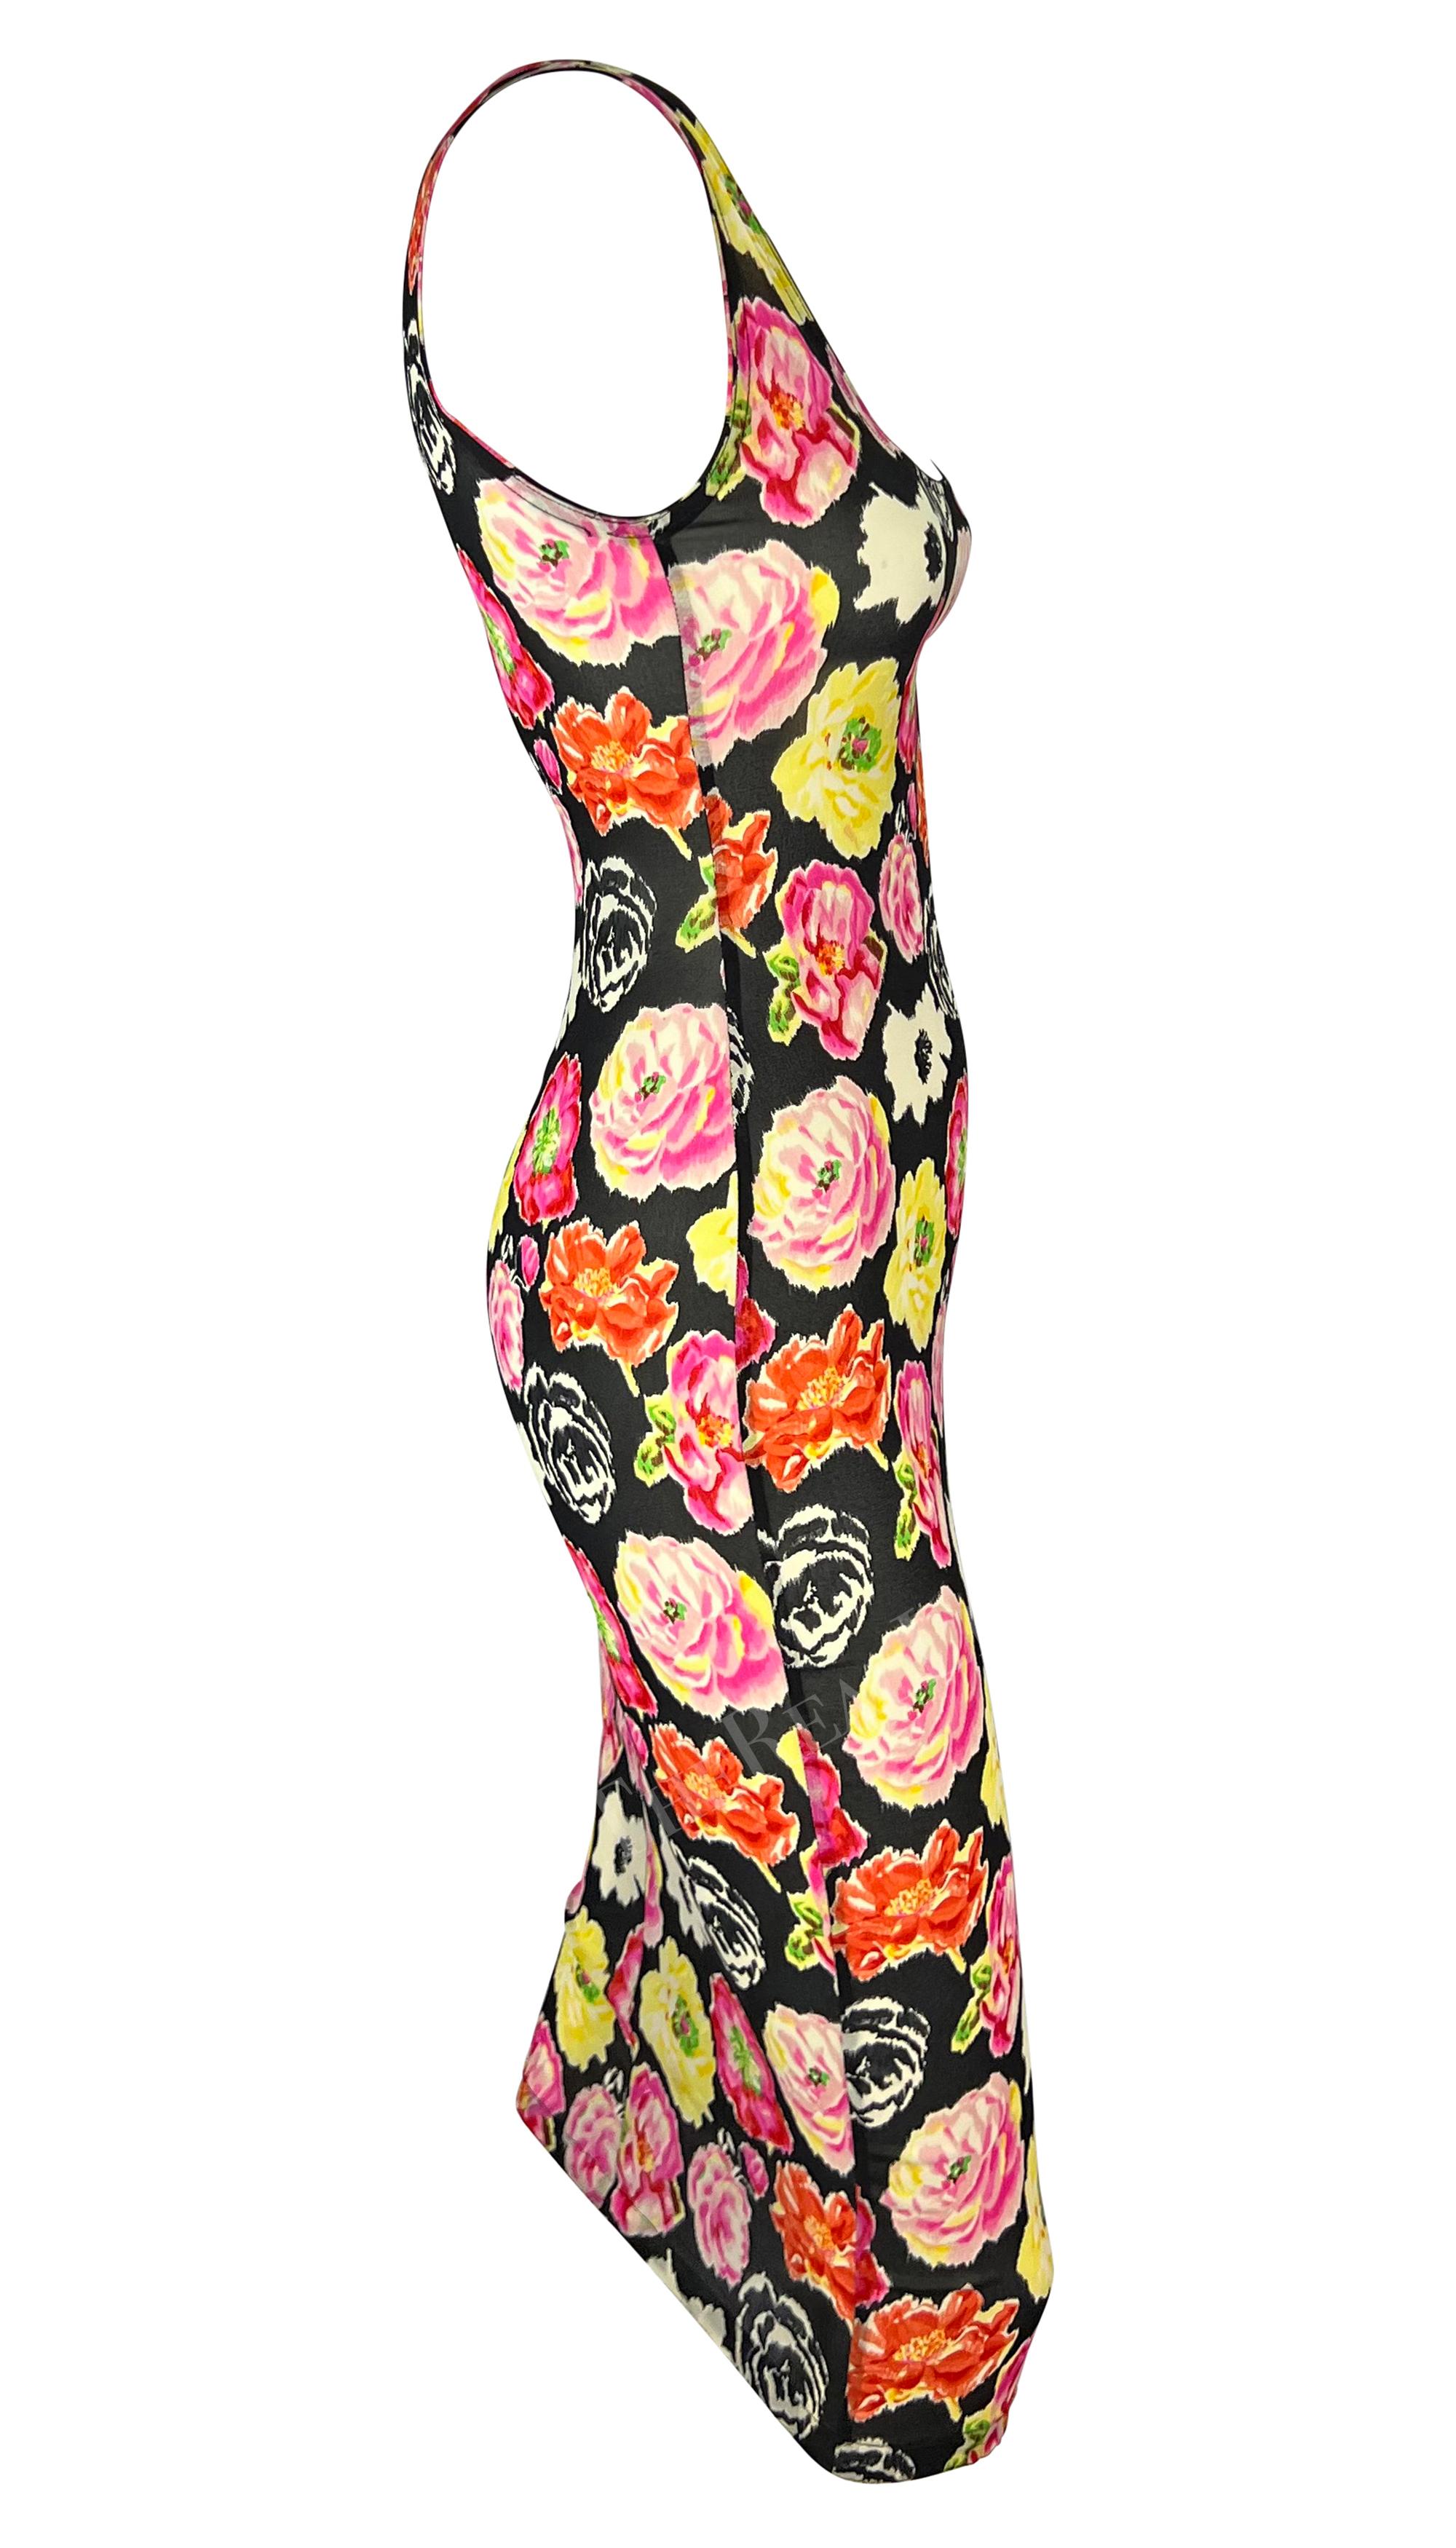 S/S 1995 Gianni Versace Runway Floral Print Semi-Sheer Slip Wiggle Dress For Sale 4